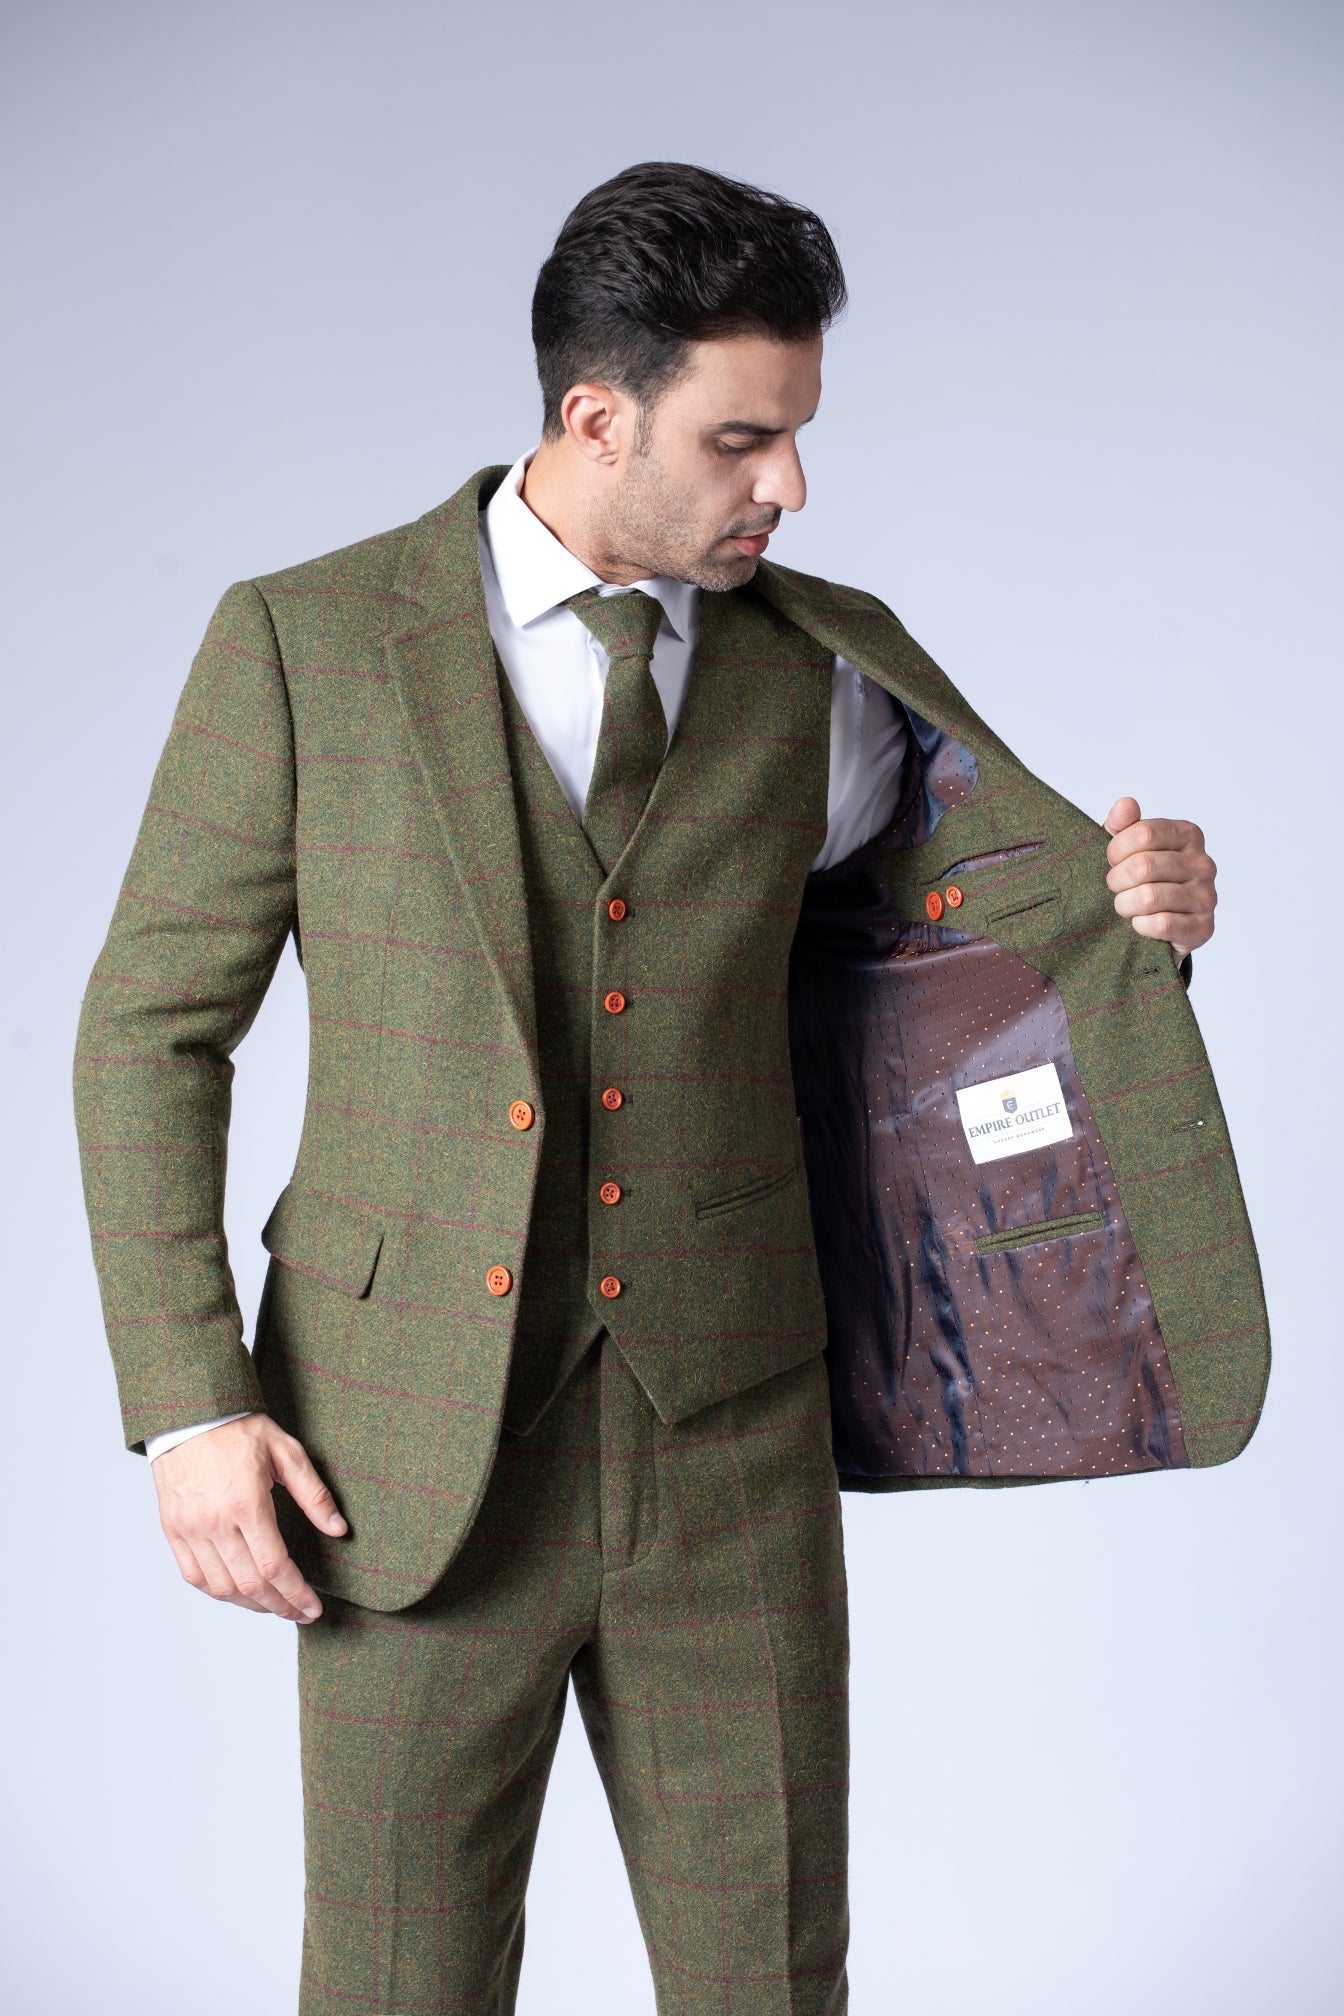 Olive Green Windowpane Tweed Suit